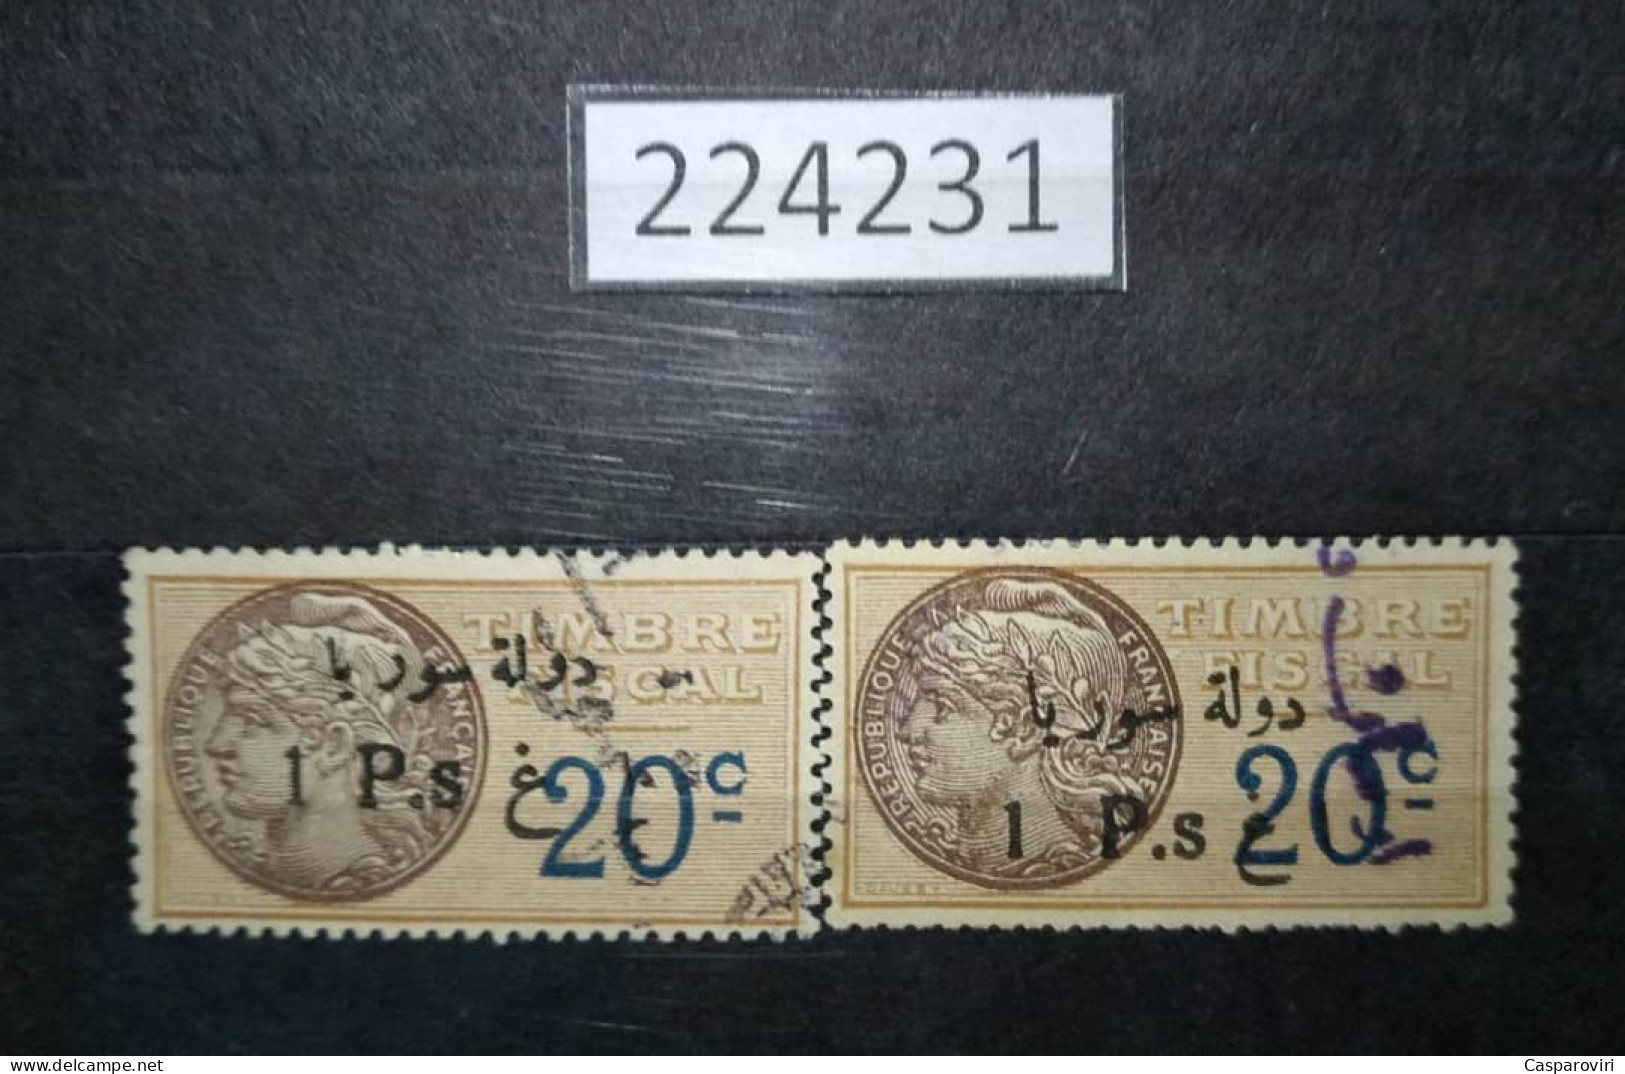 224231; French Colonies; Syria; 2 Revenue French Stamps 1P/20c; Ovpt. Etat De Syrie; Font Variation; USED - Oblitérés